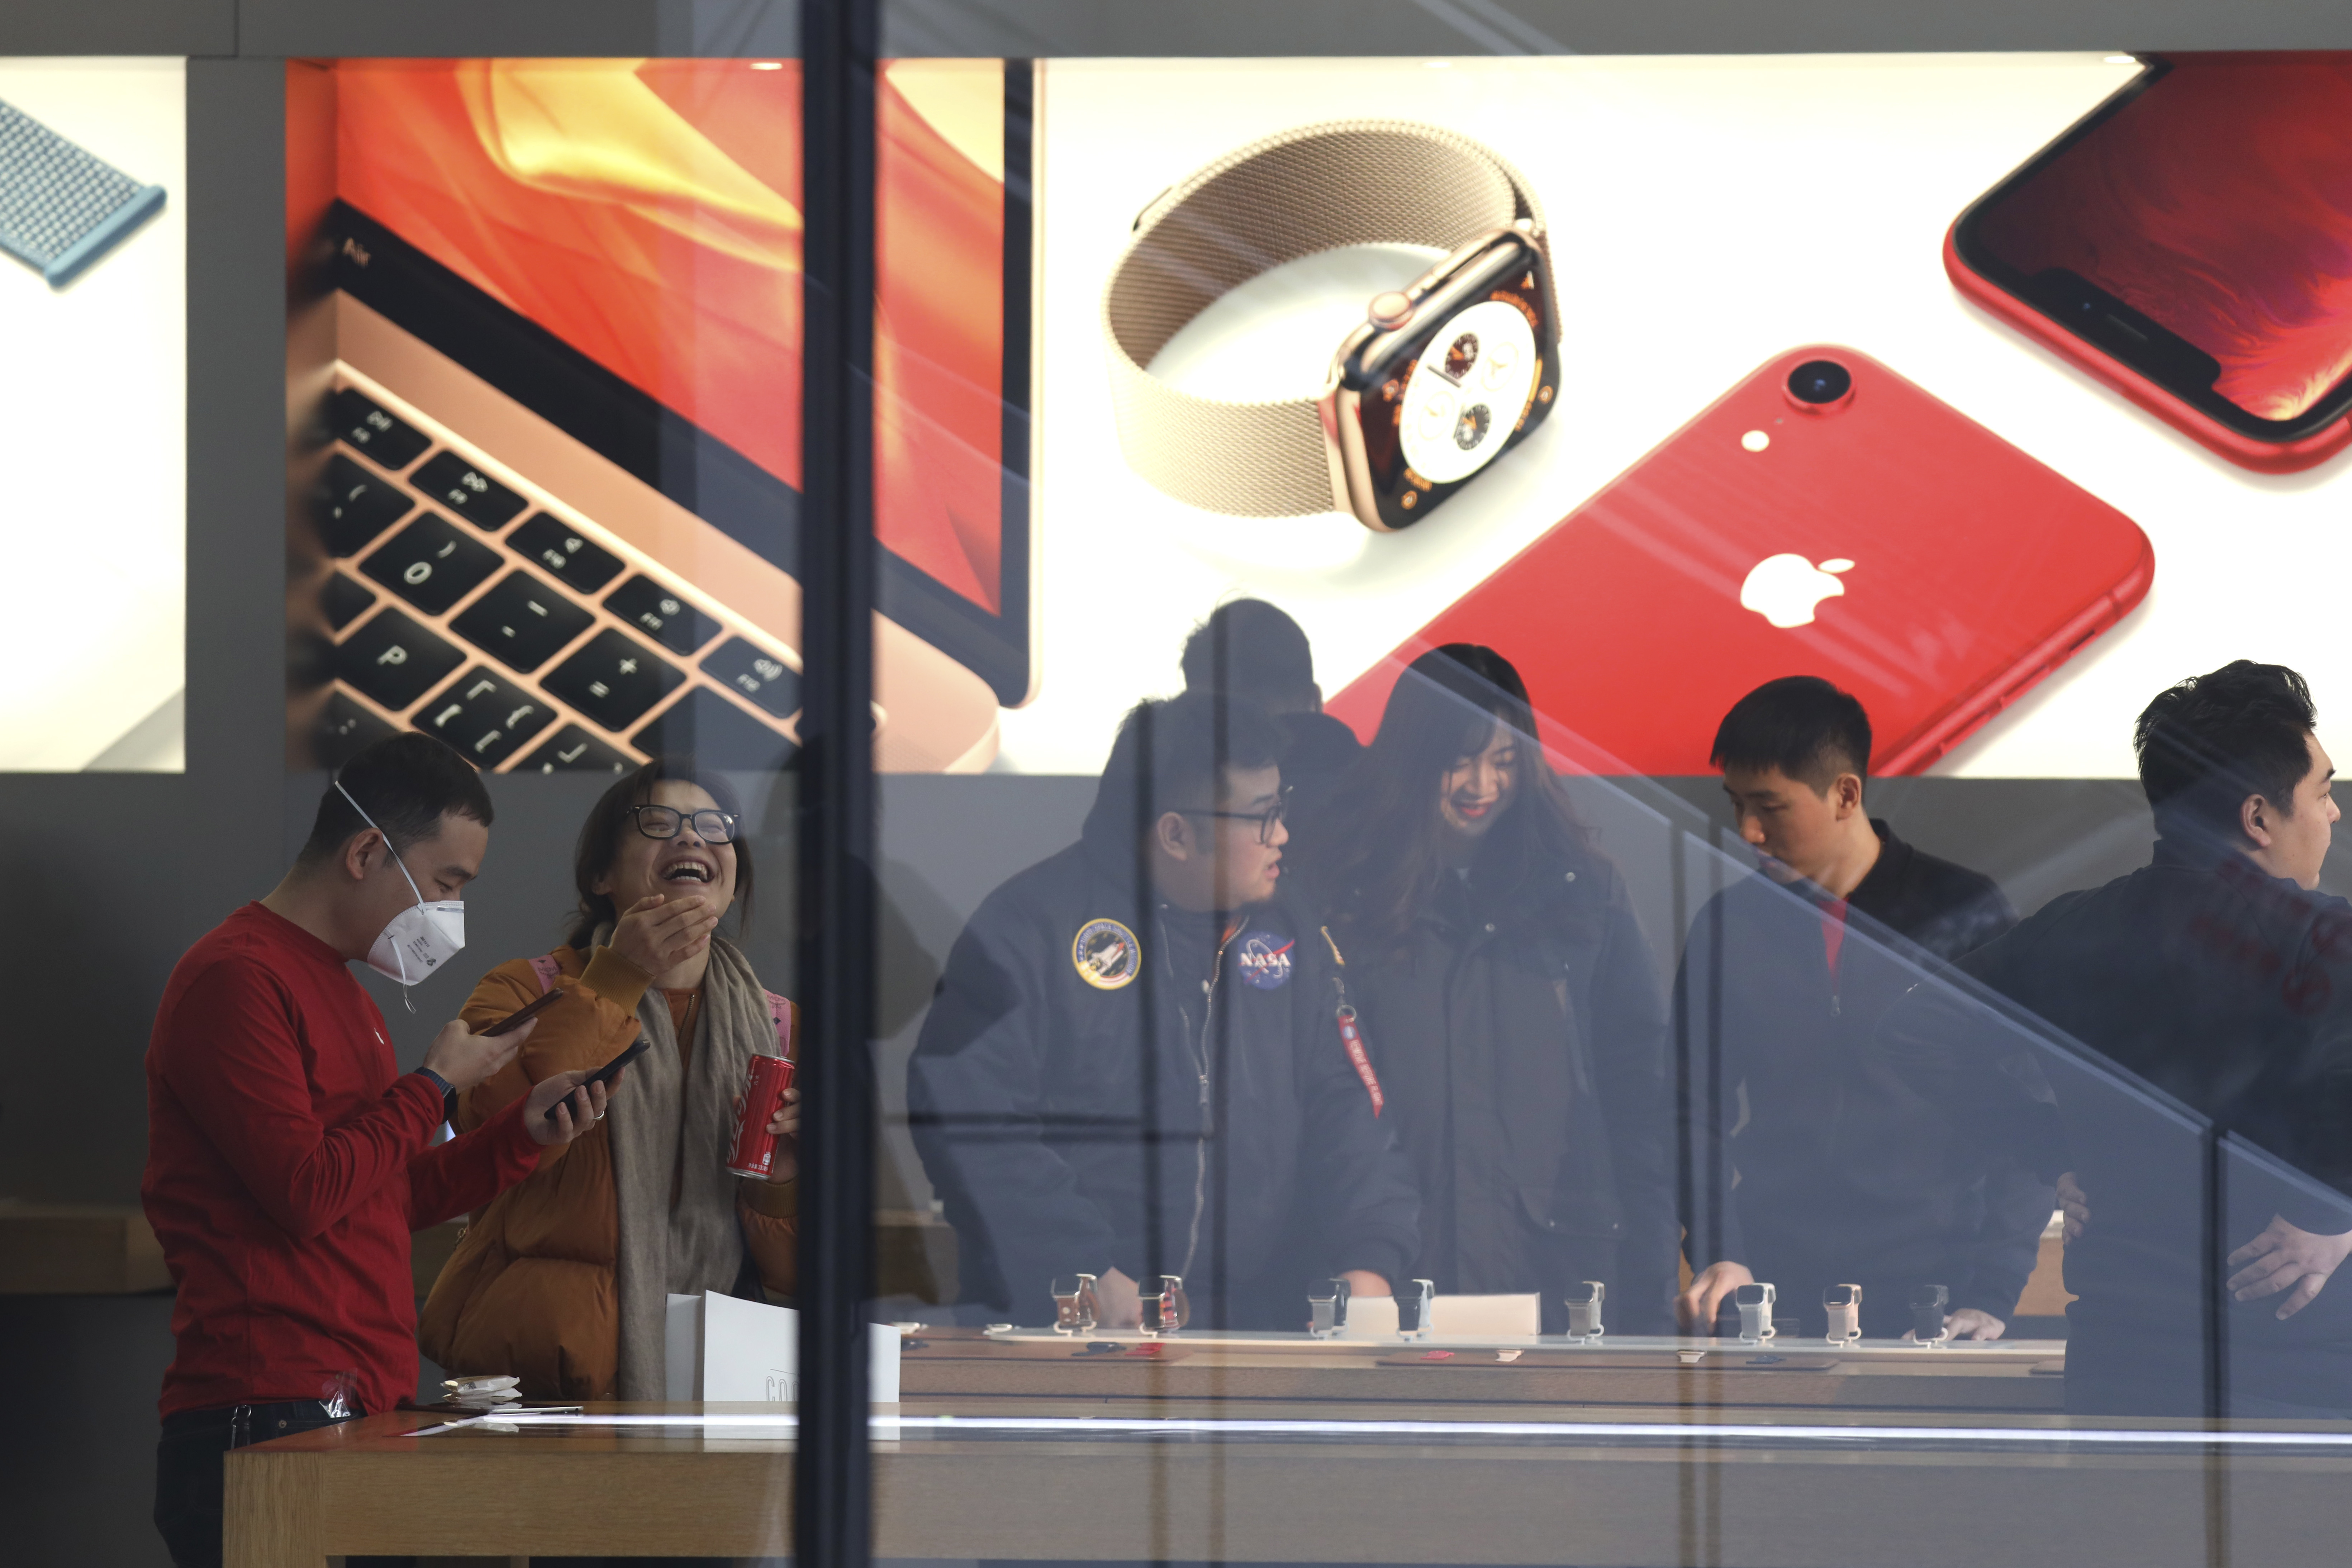 jammer gun parts group | Waning iPhone Demand Highlights Chinese Consumer Anxiety